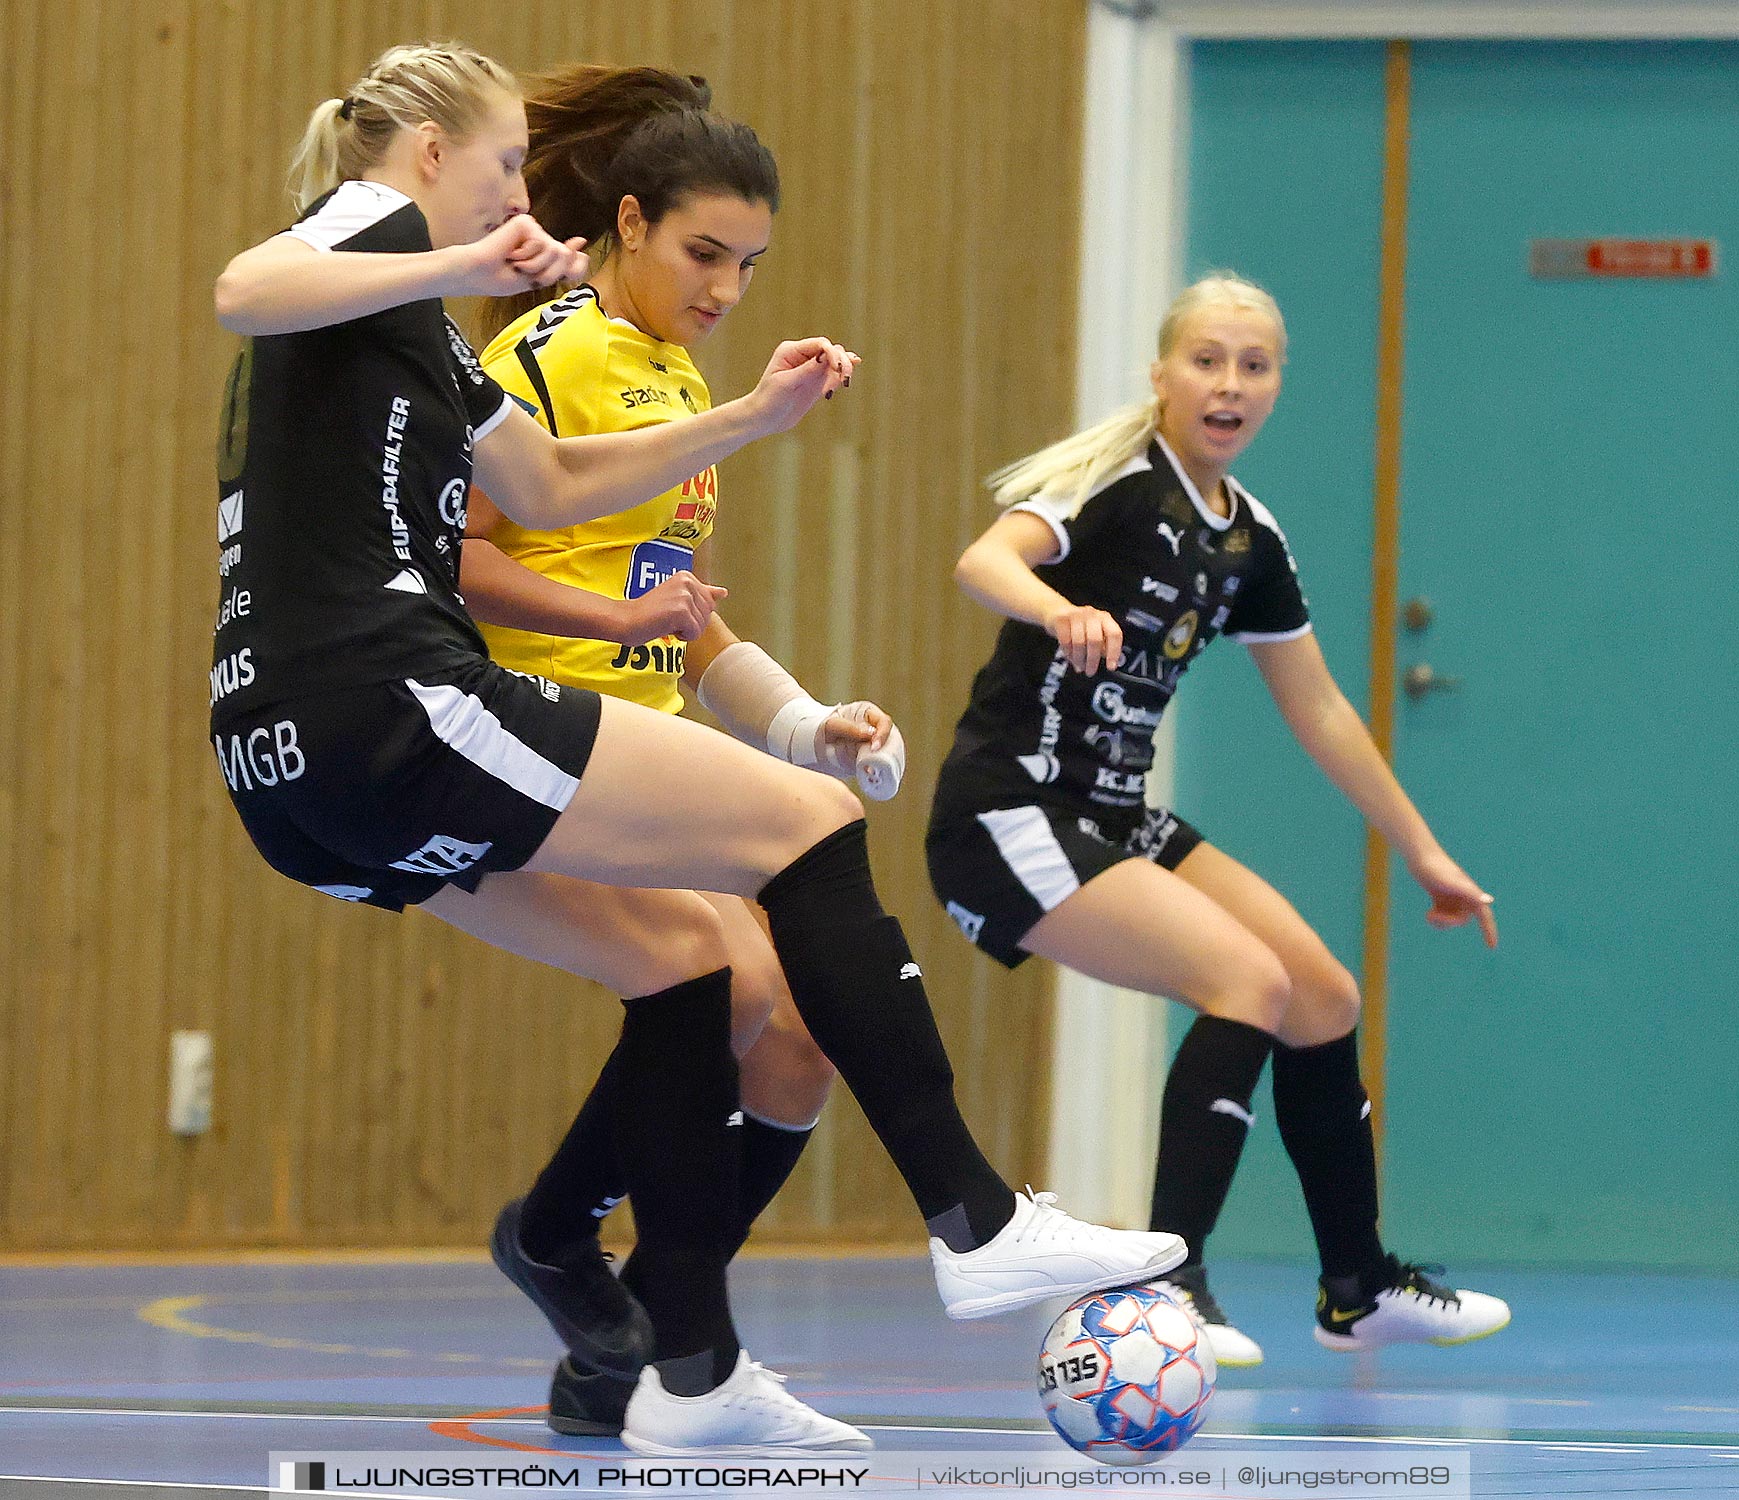 Skövde Futsalcup 2021 Damer Örebro Futsal Club-Skultorps IF 2,dam,Arena Skövde,Skövde,Sverige,Futsal,,2021,270469